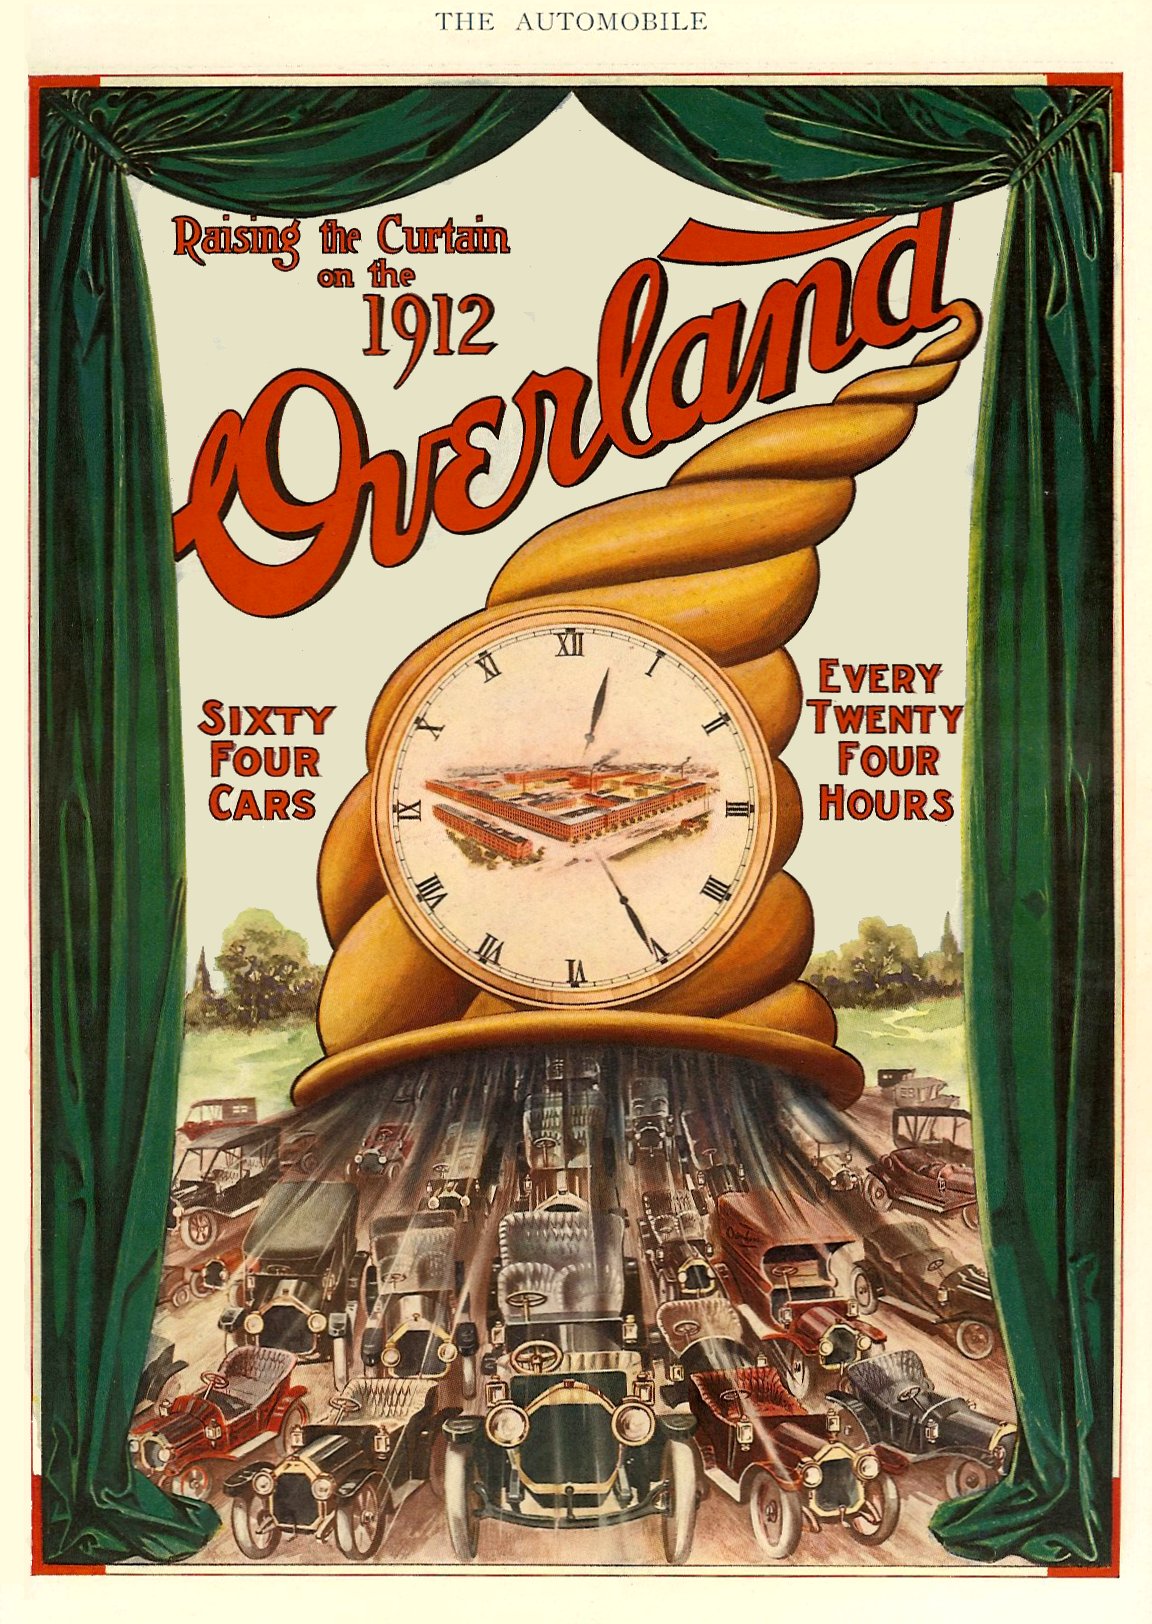 1912 Overland Auto Advertising